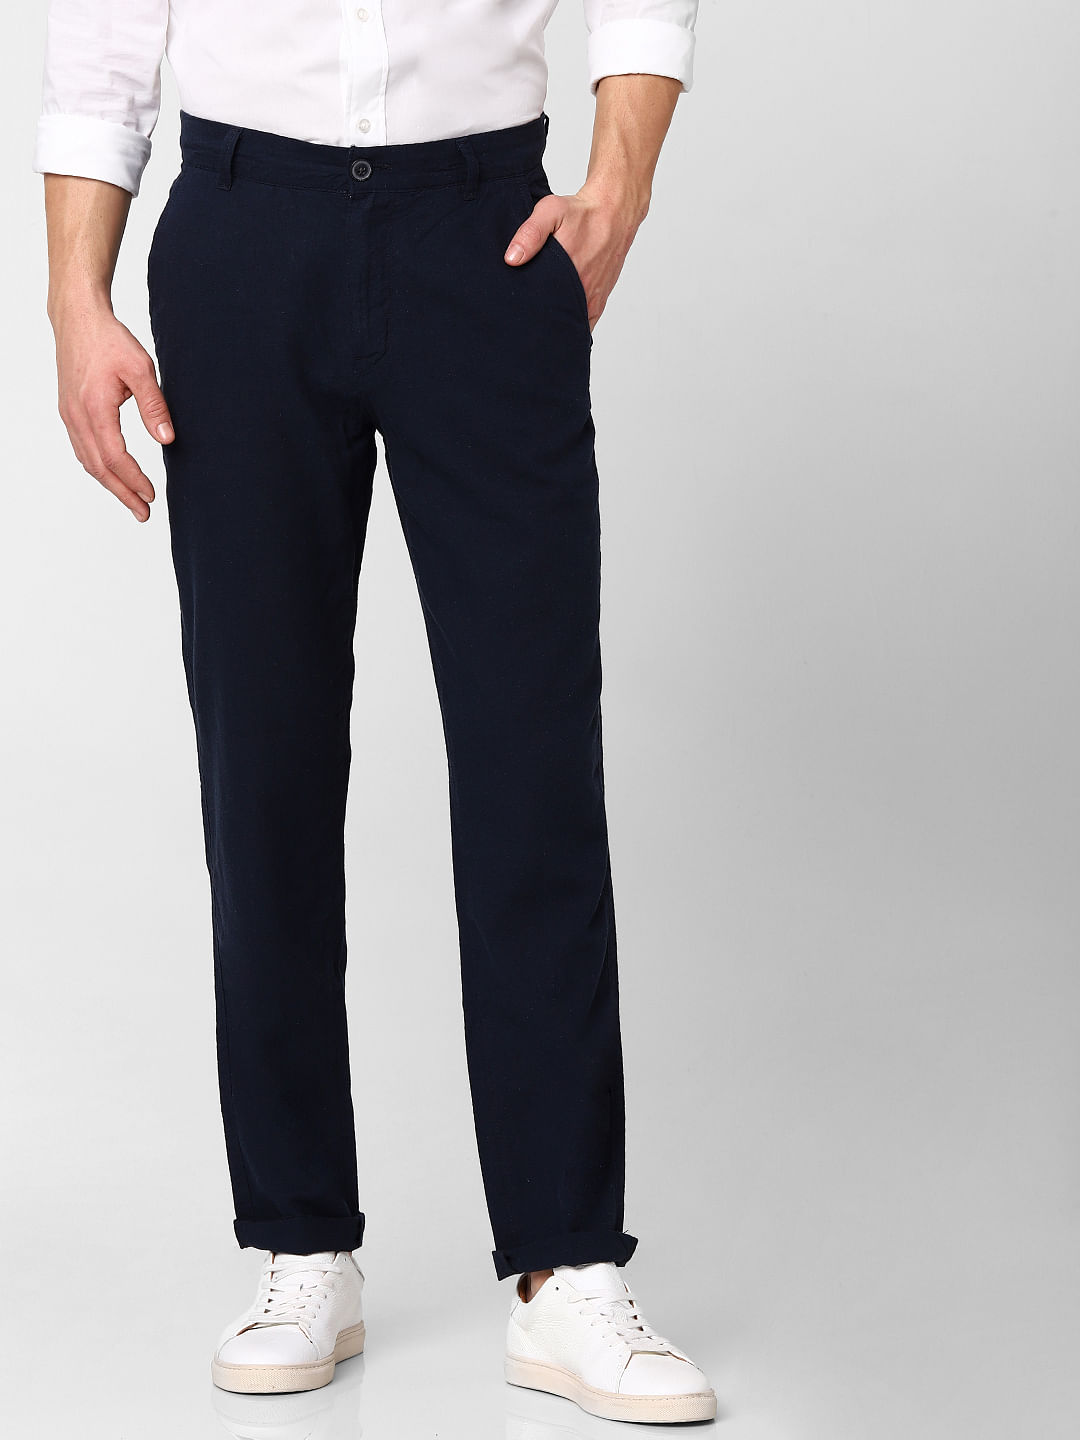 Buy Van Heusen Mens straight Formal Trousers  8907566505258VHTF1M5194428W x 30LDark Blue Solid at Amazonin